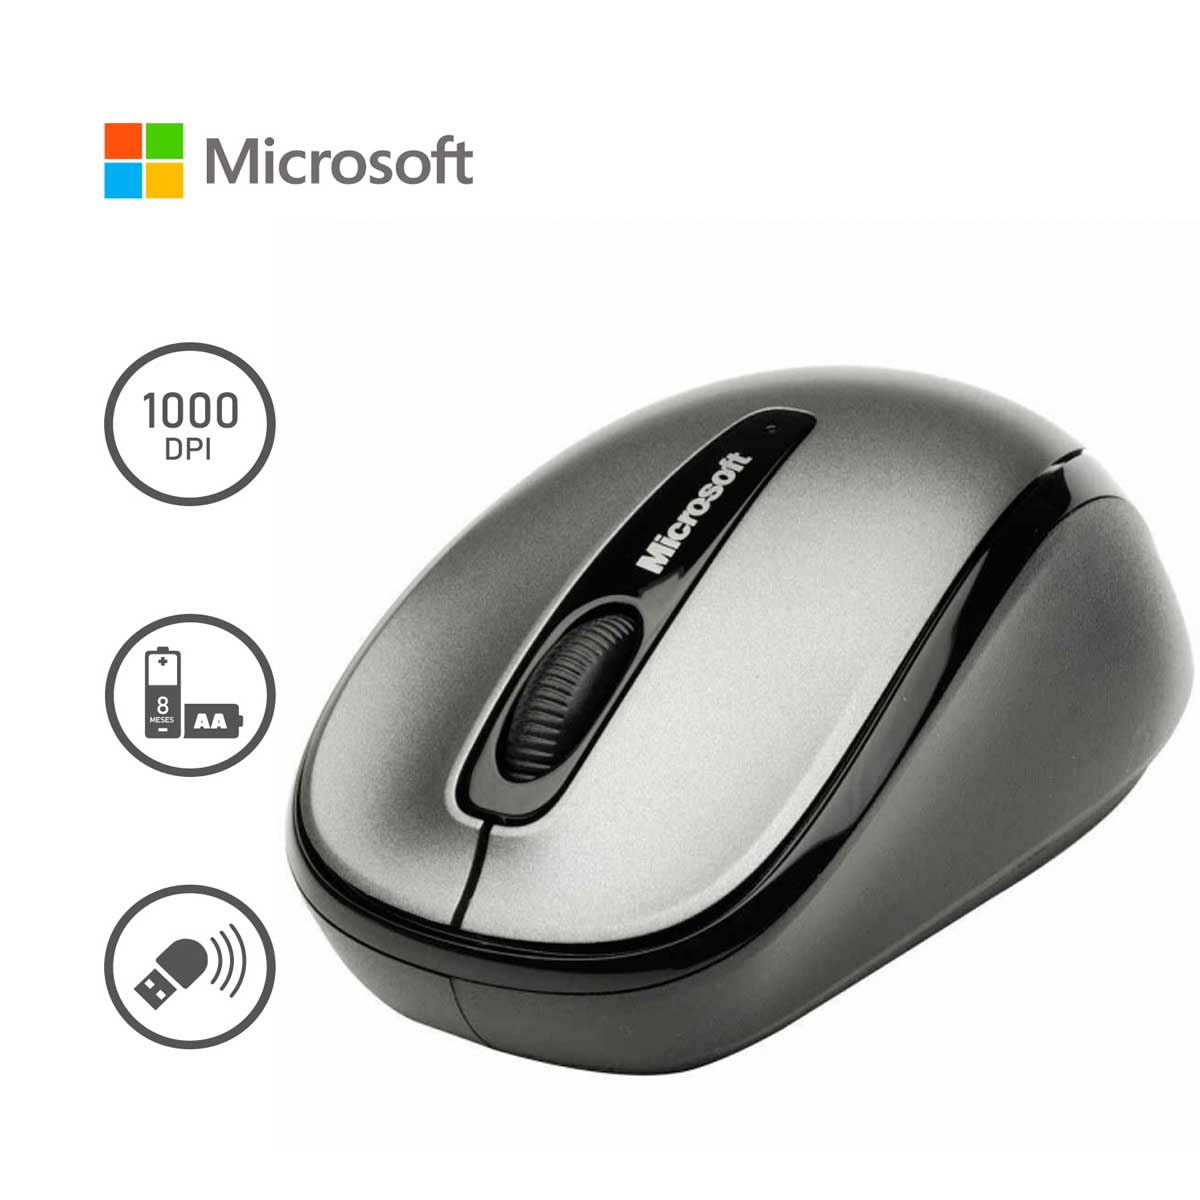 Mouse Inalámbrico Microsoft Mobile 3500 1000 Dpi BlueTrack Receptor USB Gri